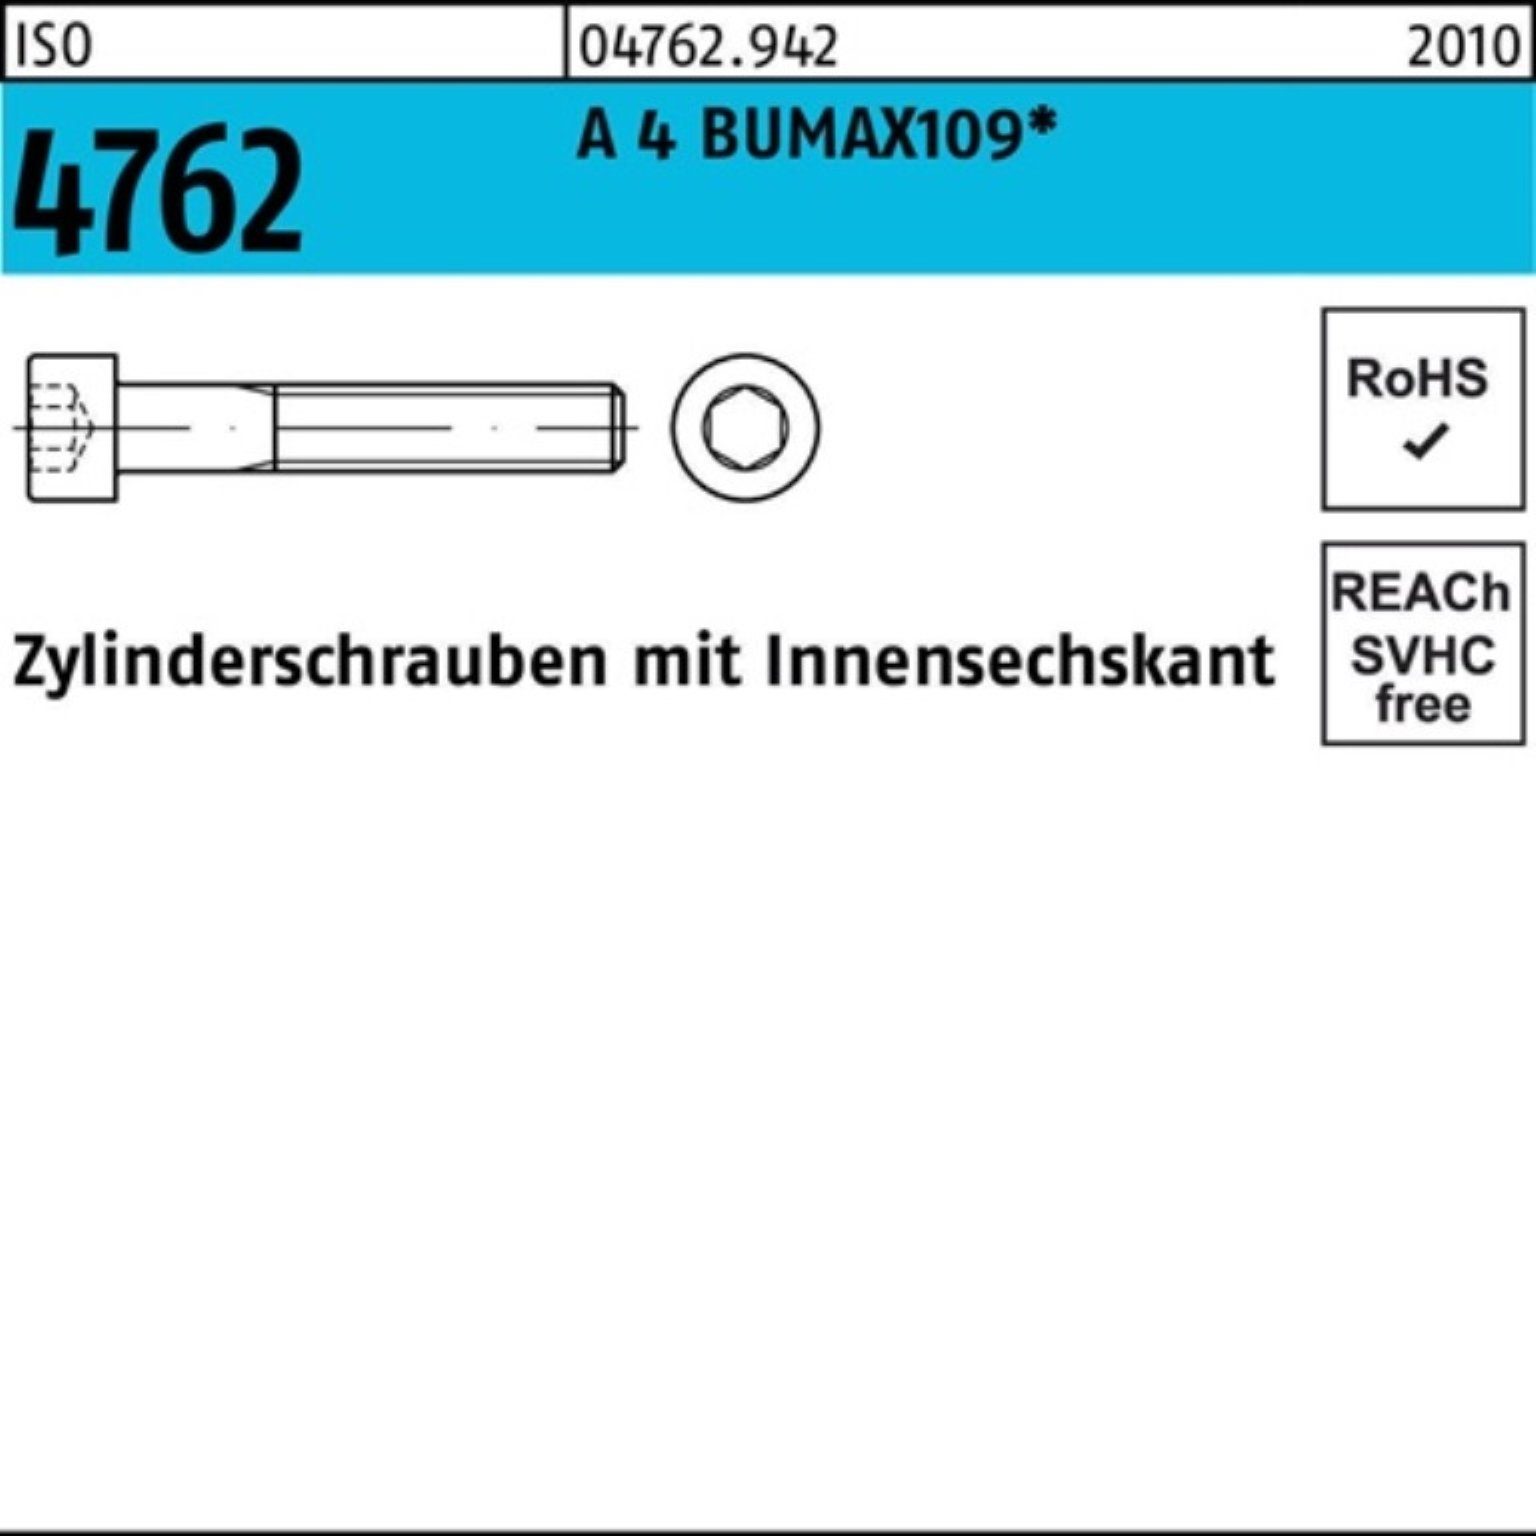 Bufab Zylinderschraube 100er Pack Zylinderschraube 80 4762 Innen-6kt 4 ISO A 25 BUMAX109 M12x